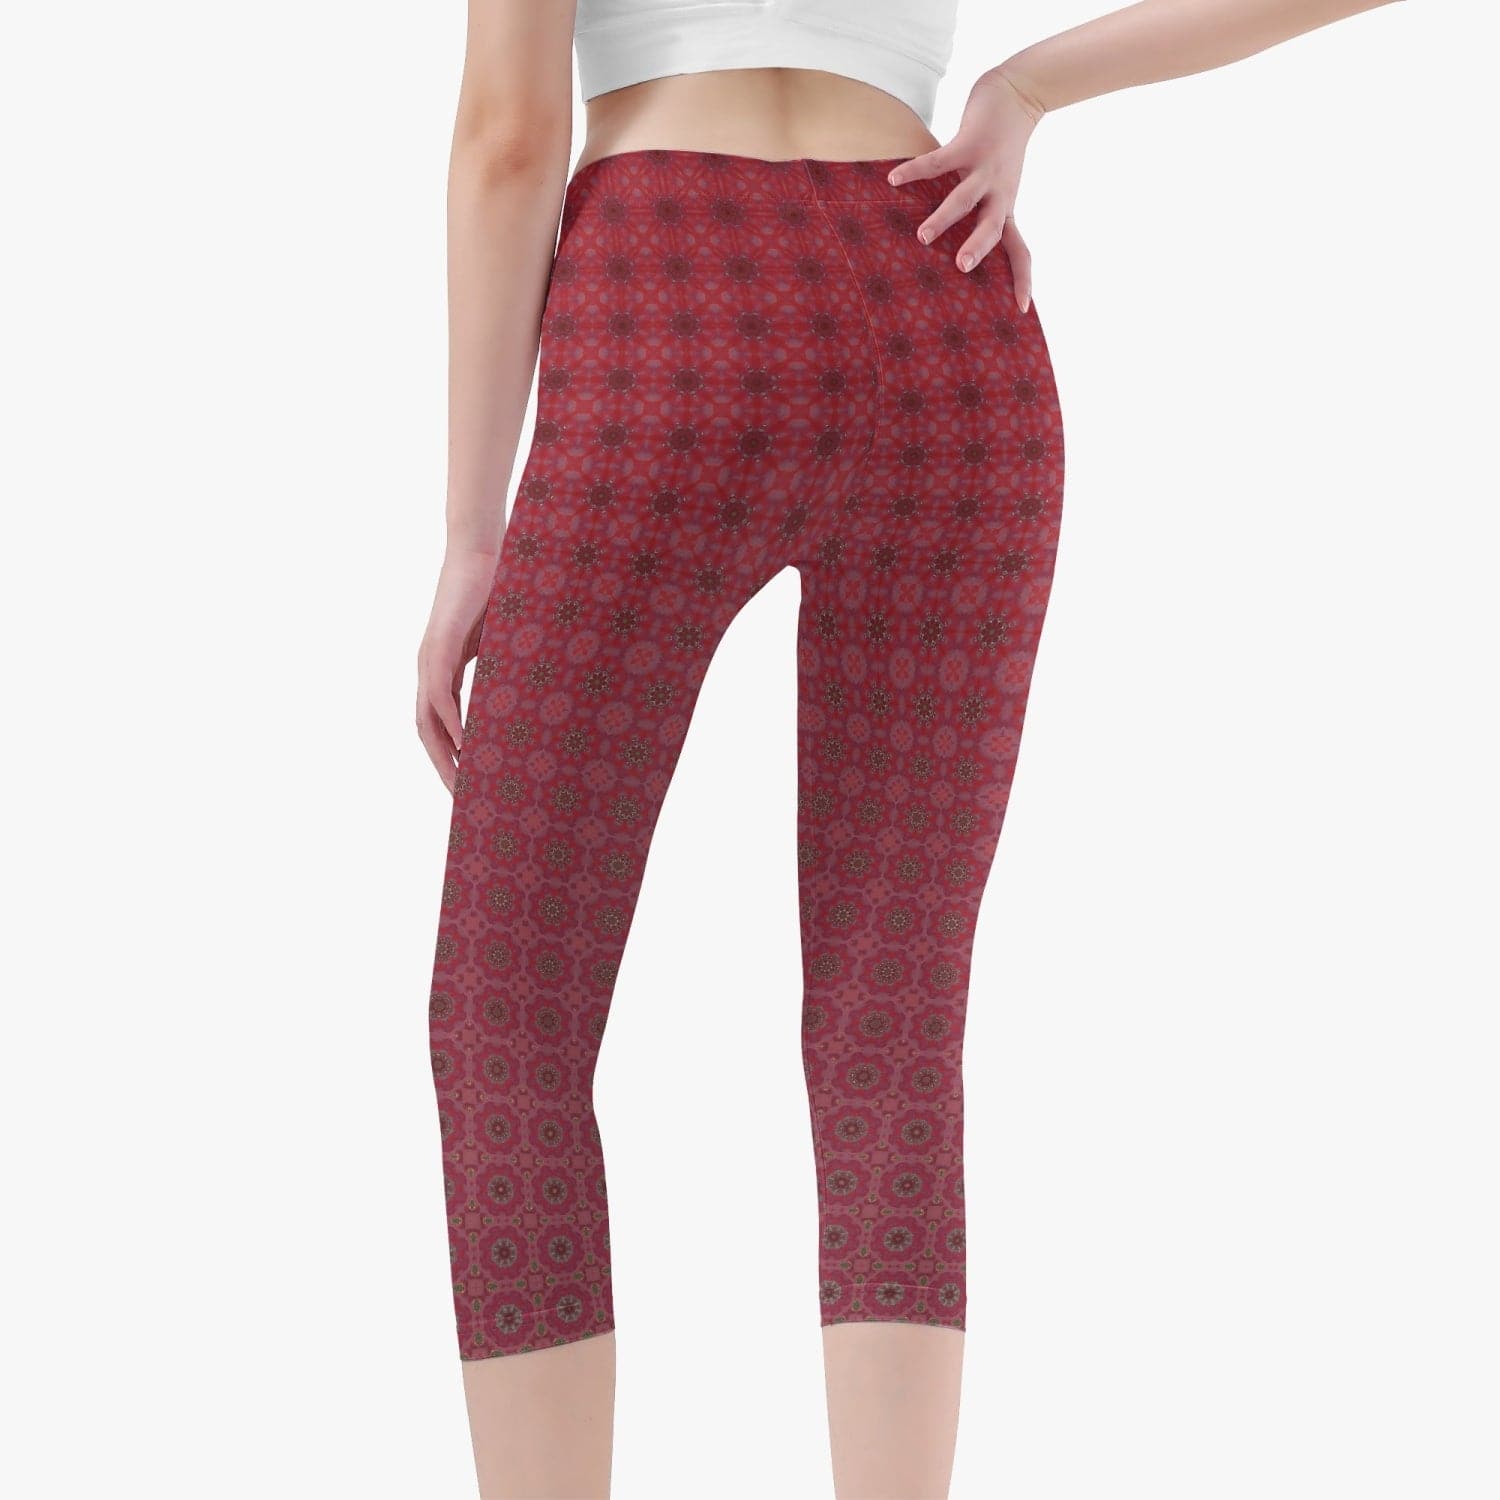 Perfect Contour Red Wine rosy patterned skinny Fit 3/4 Short Yoga, Running Pants/ Leggings, by Sensus Studio Design